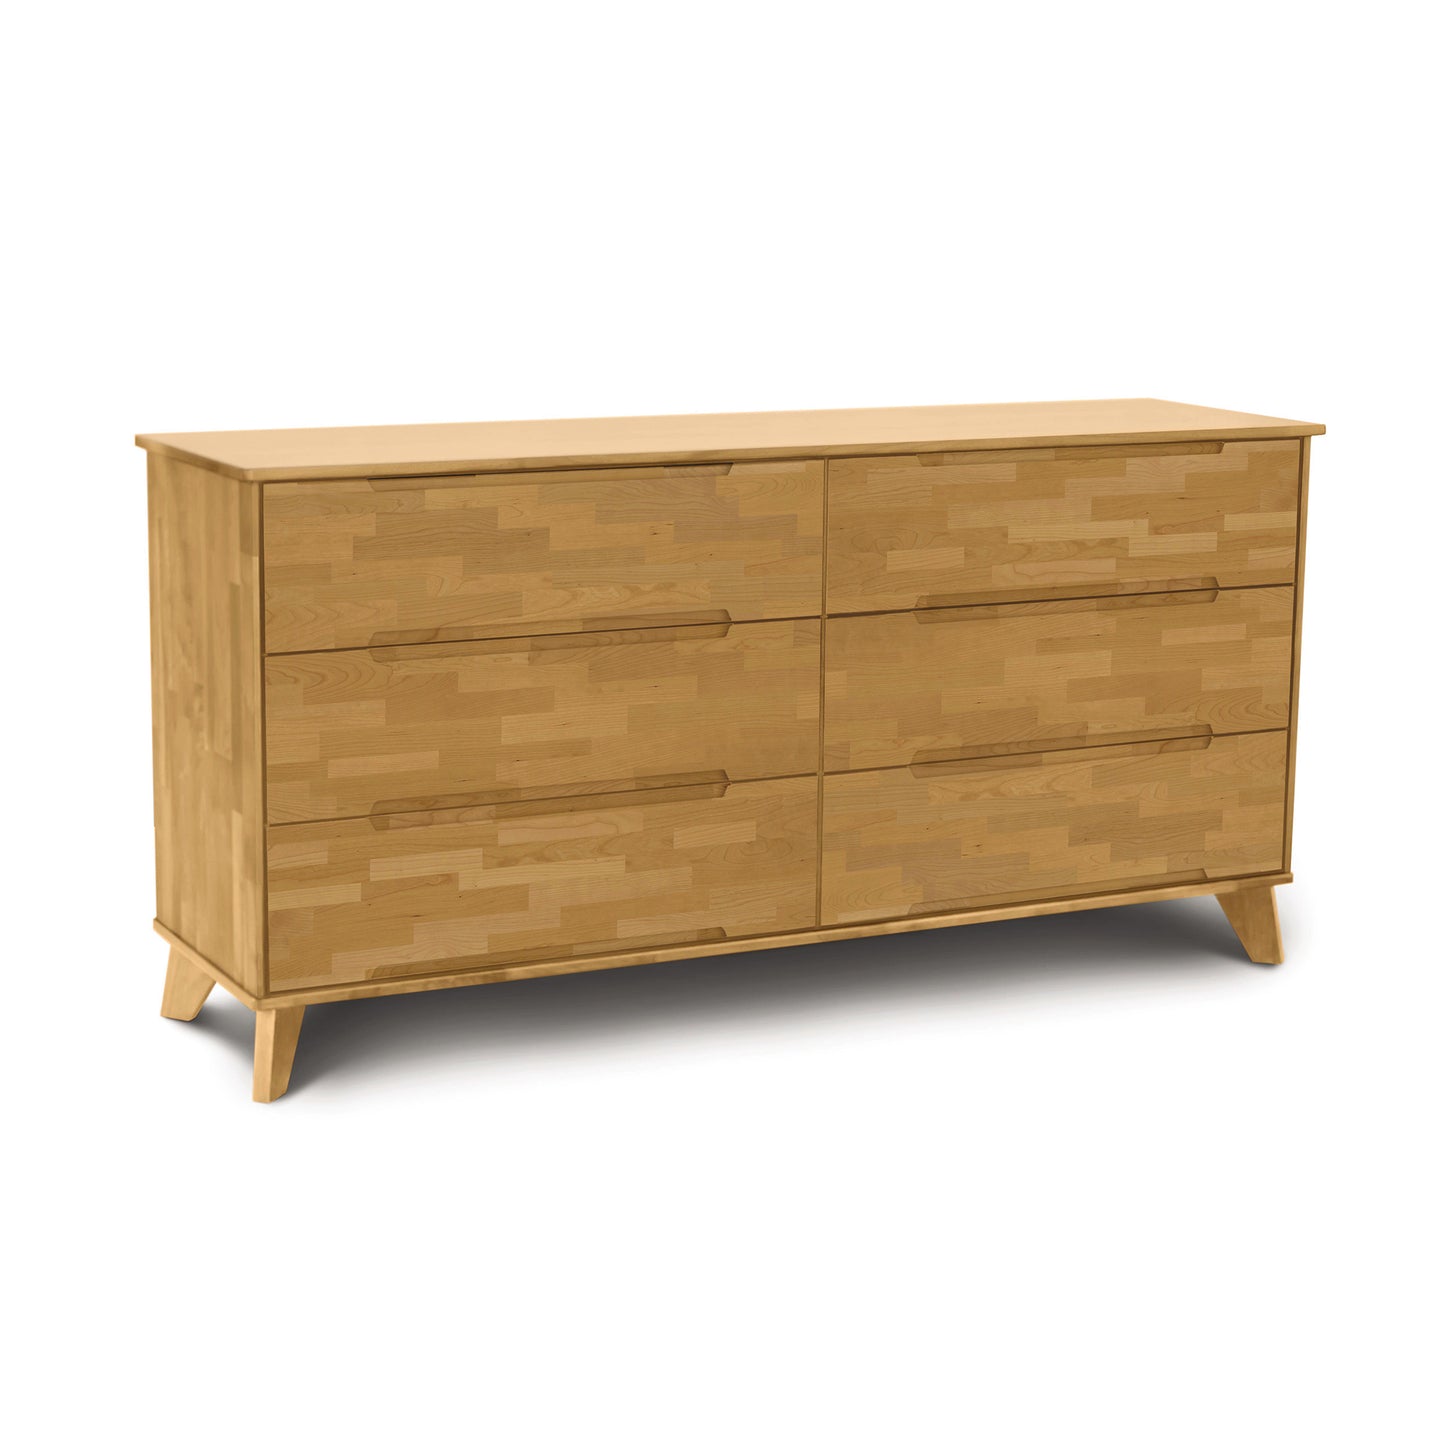 A mid-century modern, wooden Linn 6-Drawer Dresser by Copeland Furniture on a plain white background.